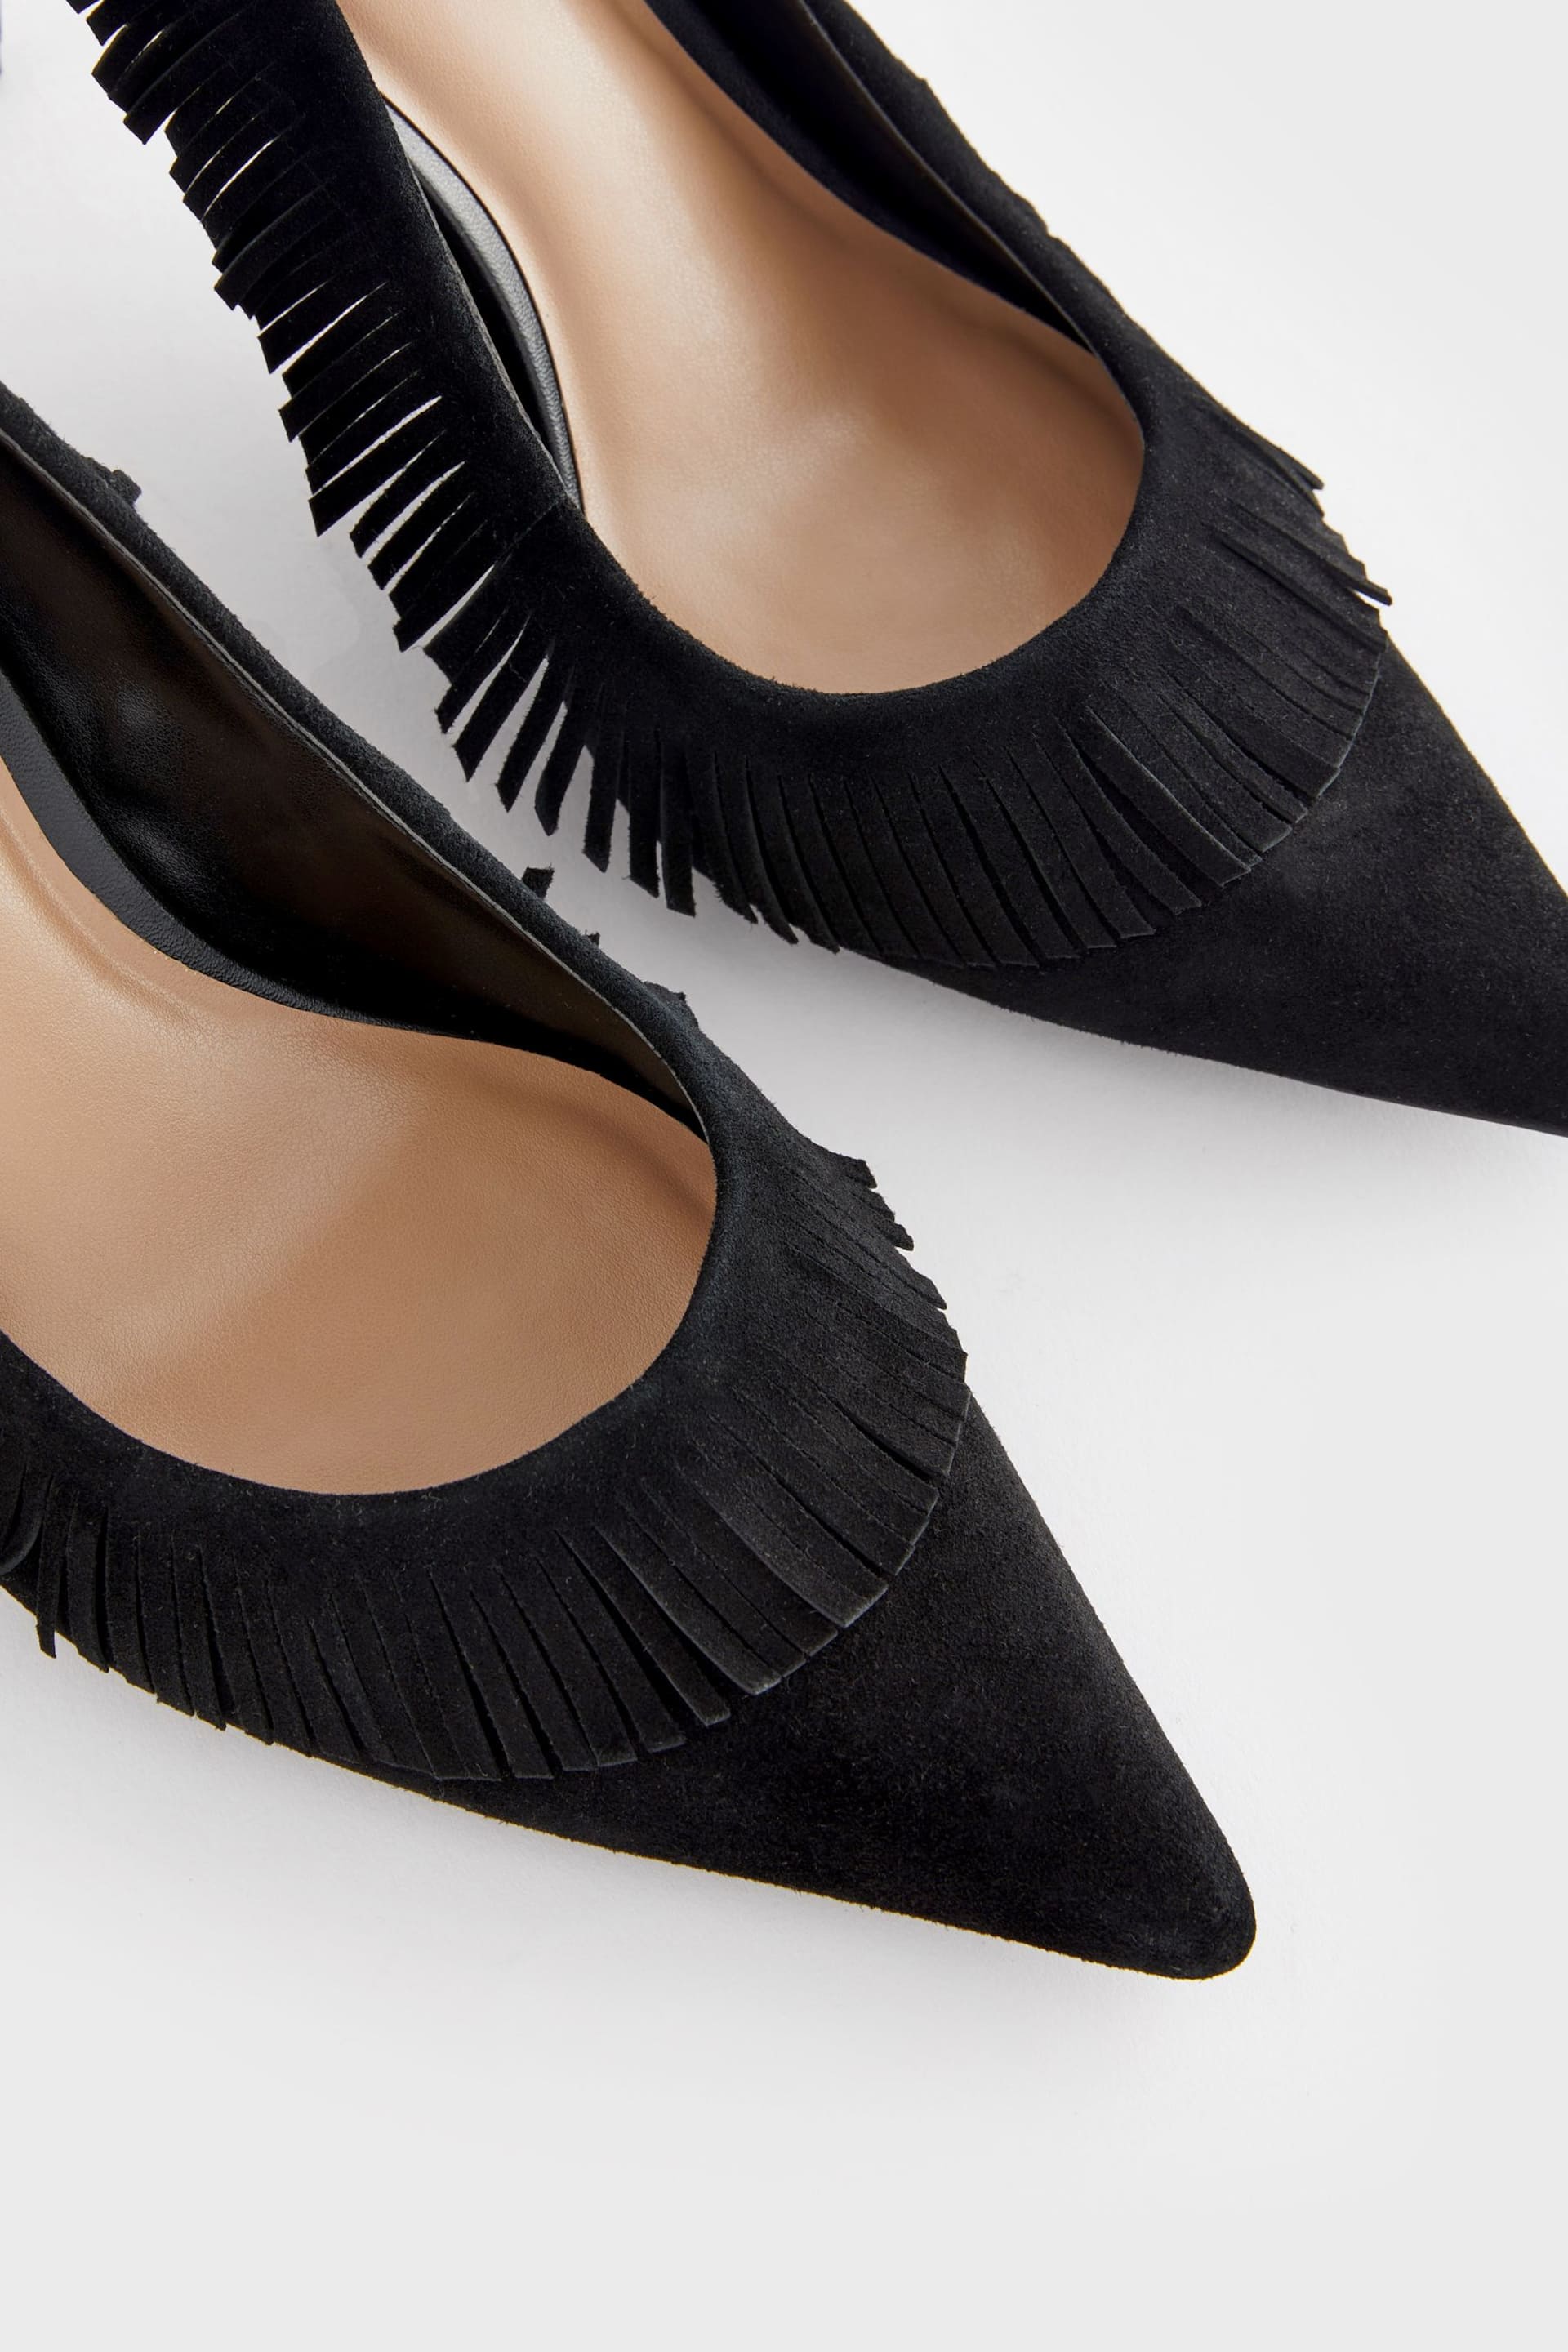 Black Forever Comfort Leather Fringe Court Shoes - Image 3 of 5